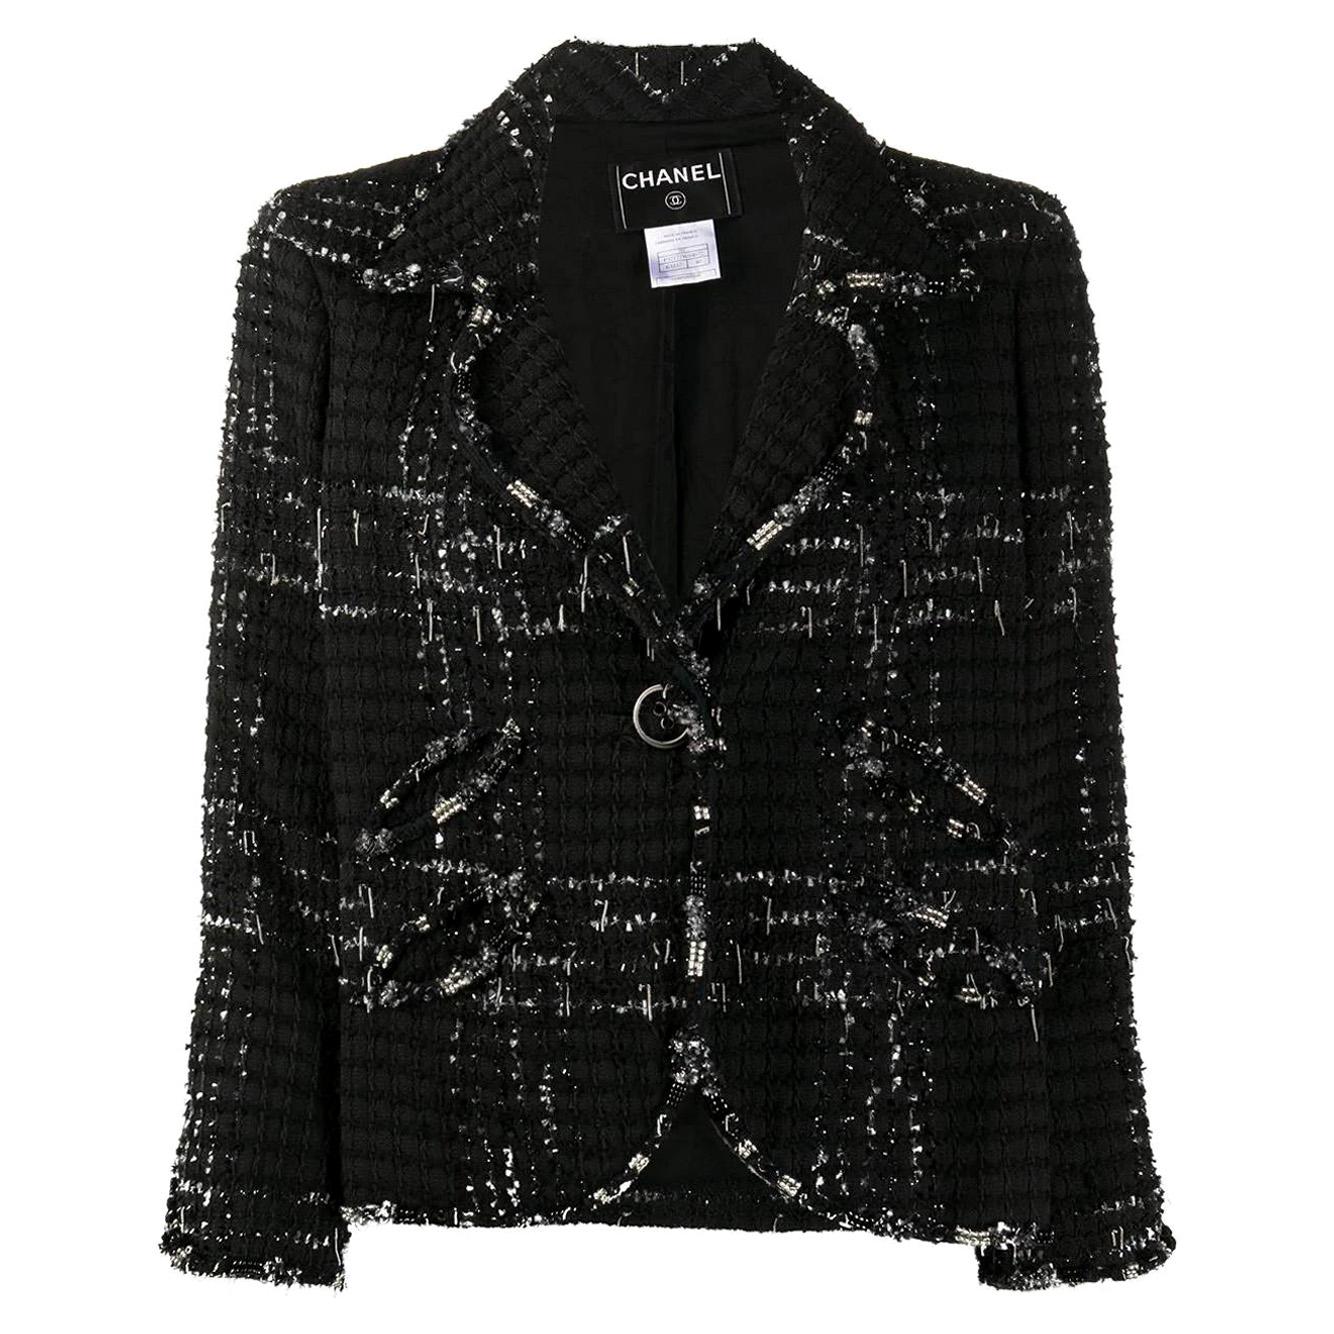 2000s Chanel black Tweed Jacket